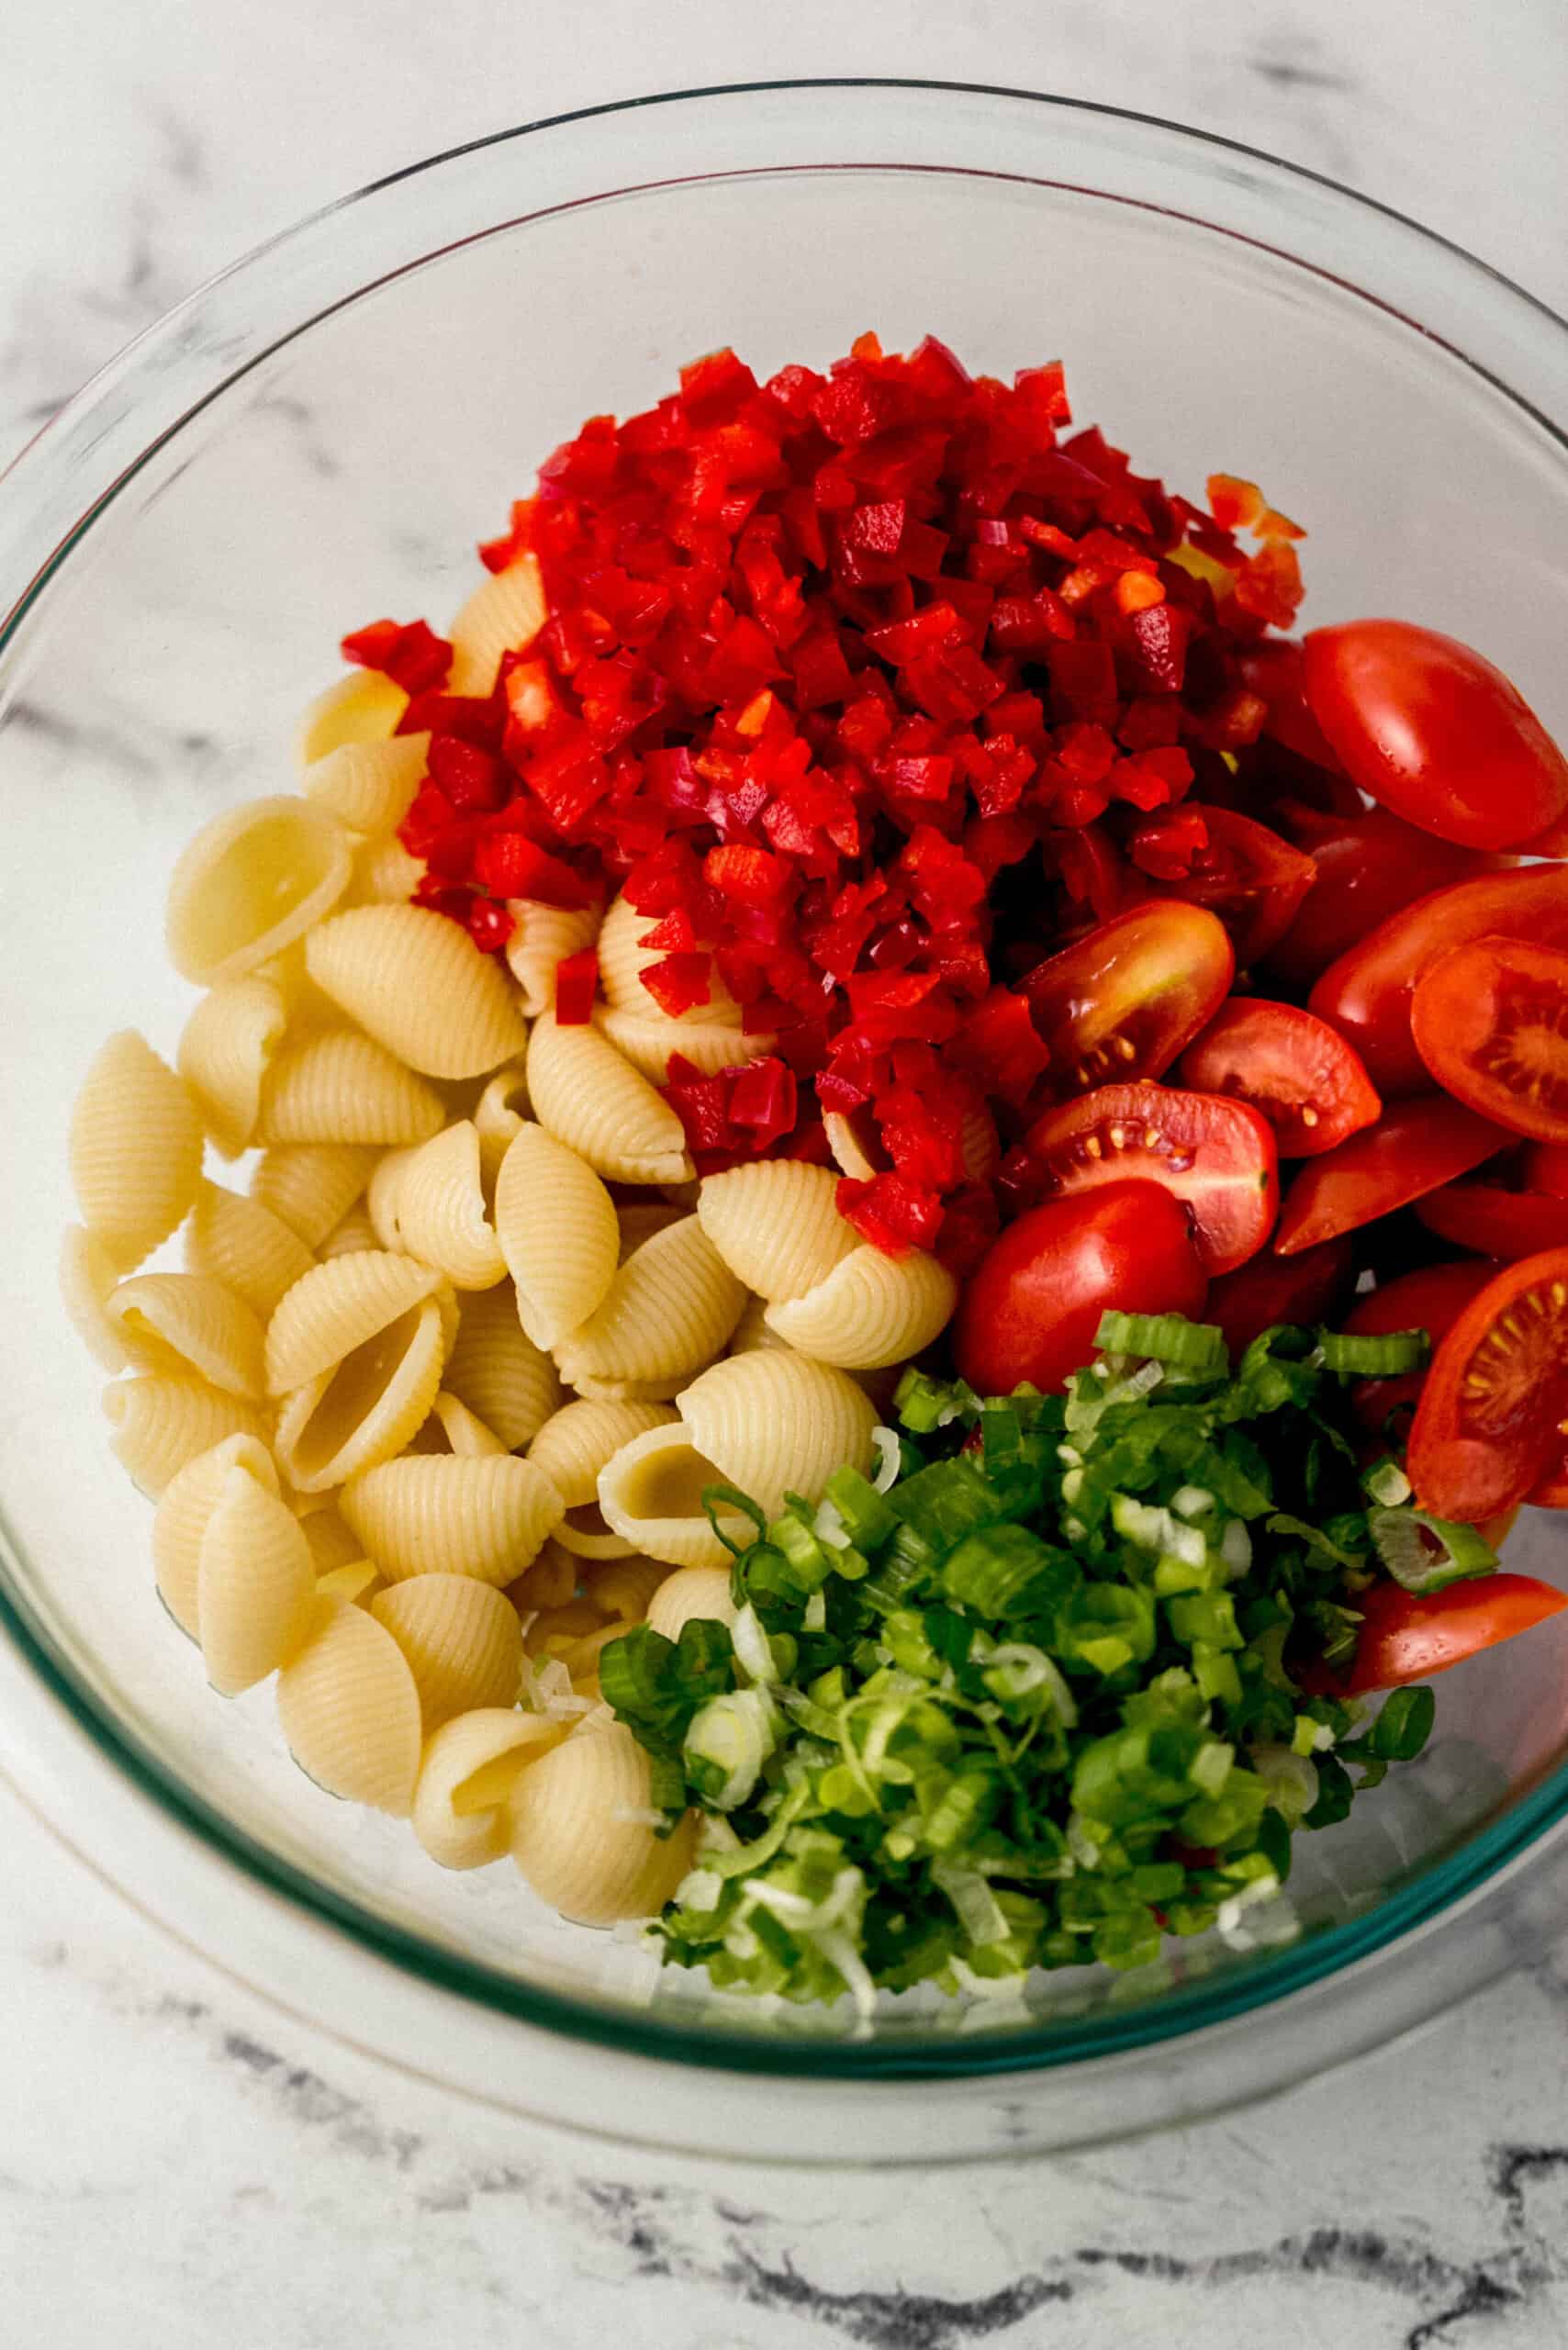 ingredients to make pasta salad added to large glass mixing bowl 